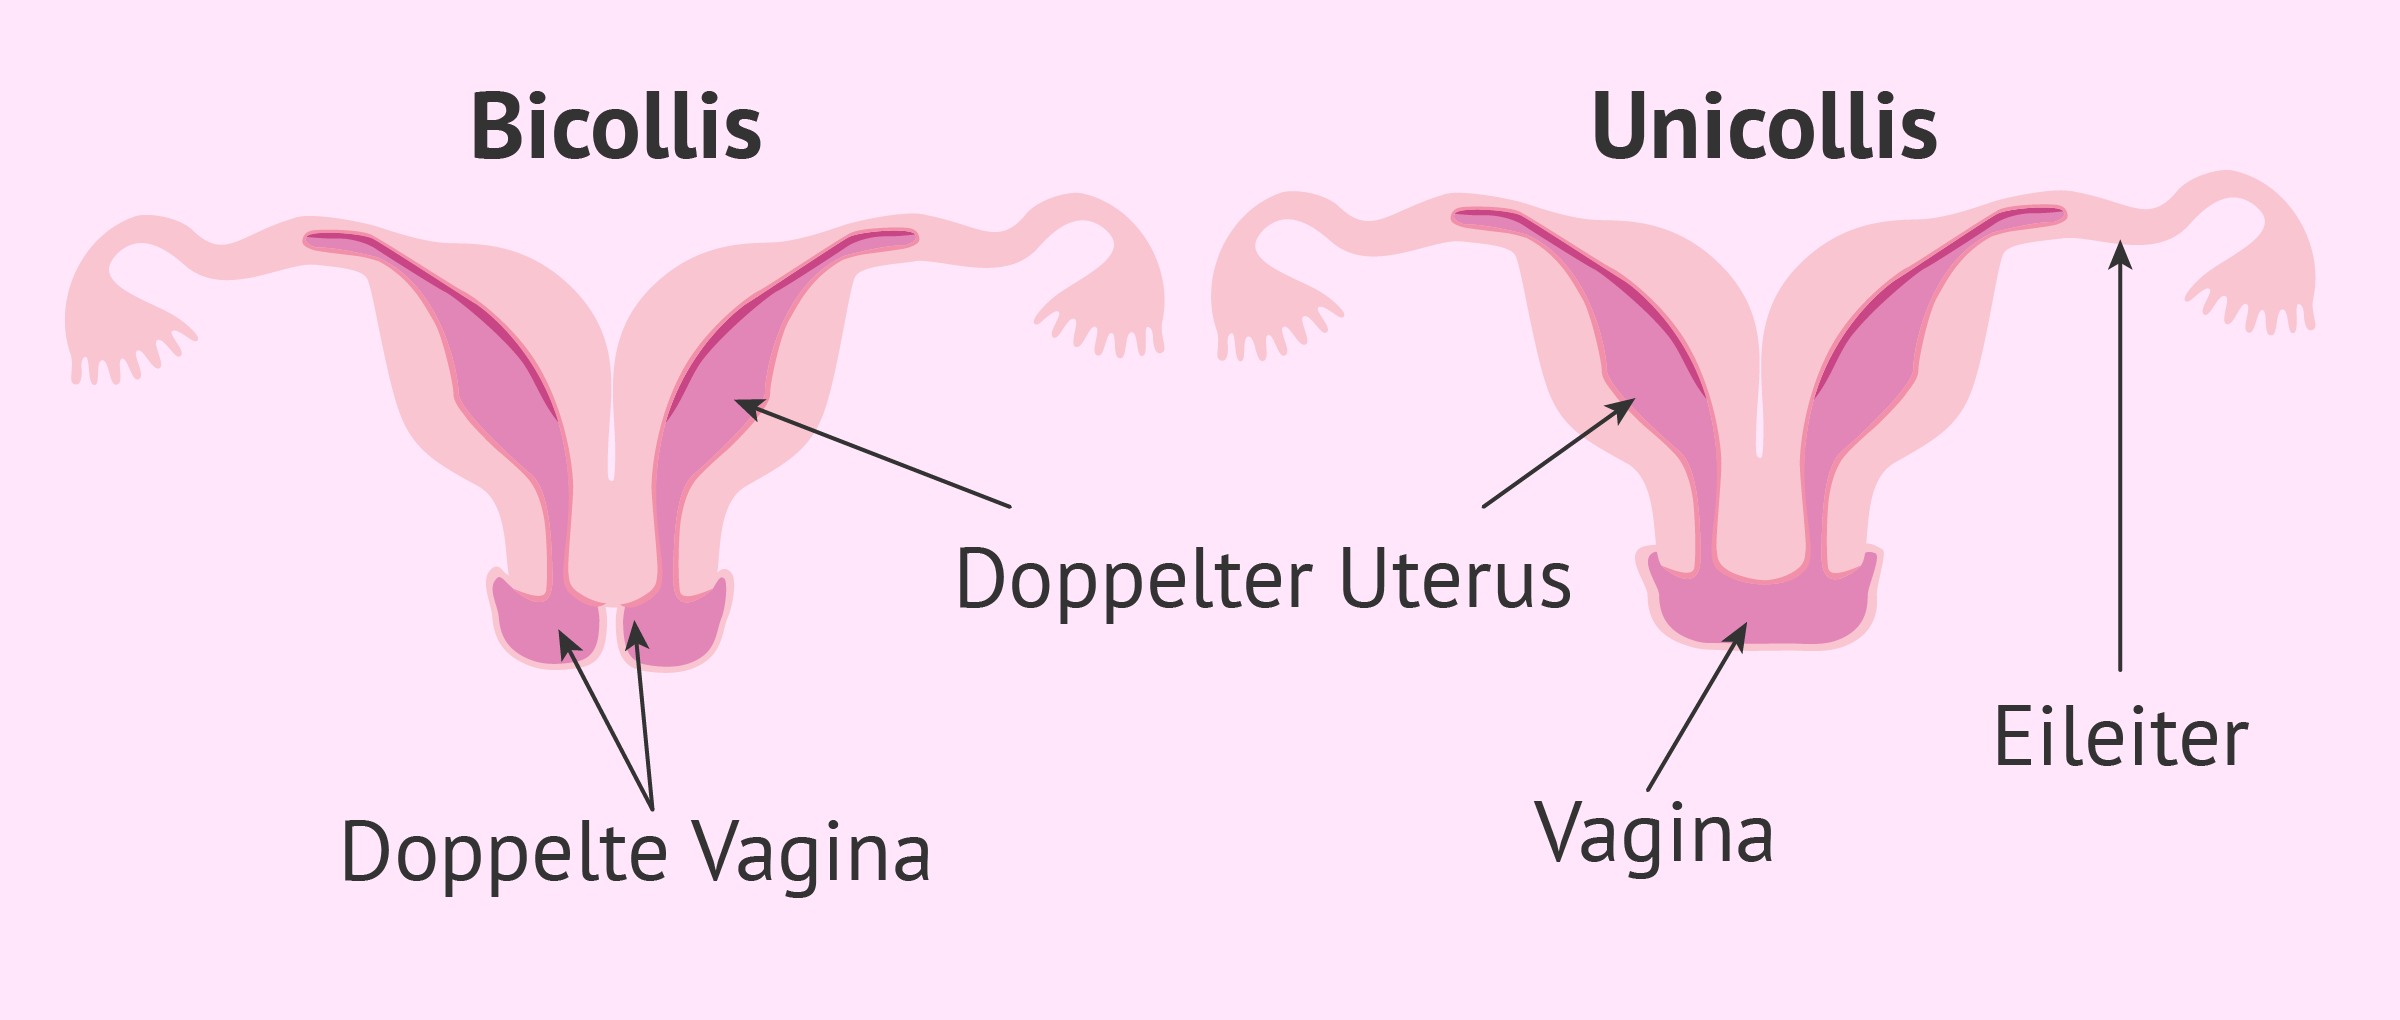 Uterus didelphys